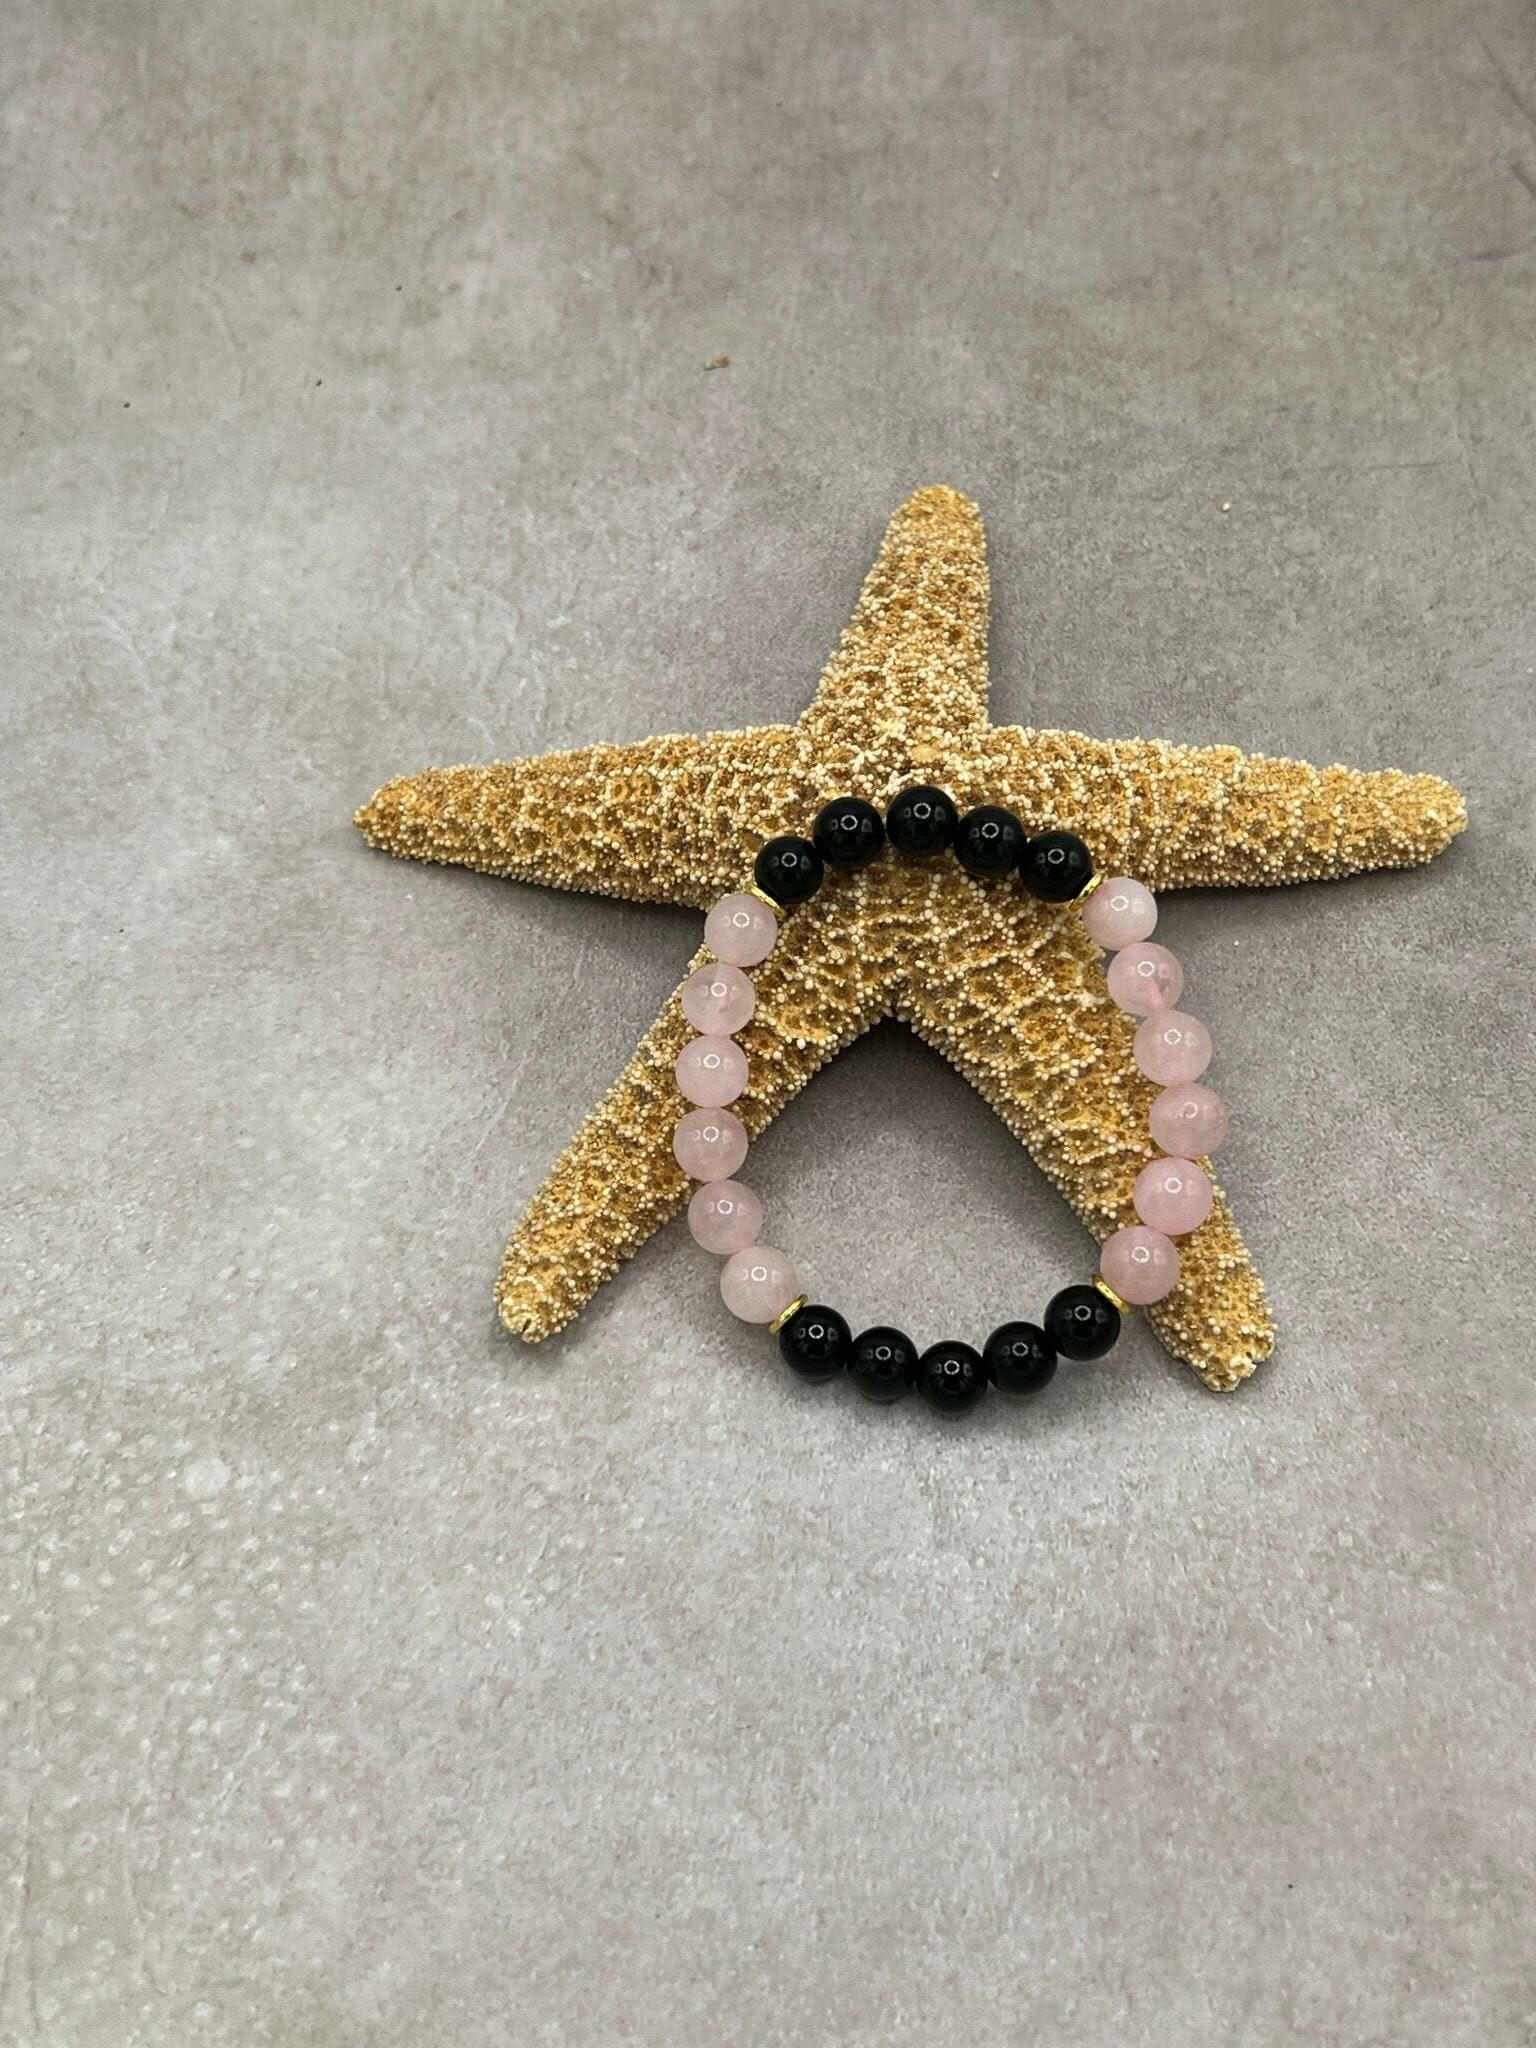 Bec Sue Jewelry Shop chakra bracelet 6.5 / black/pink / rose quartz/obsidian Handcrafted Rose Quartz & Obsidian Bead Tags 543